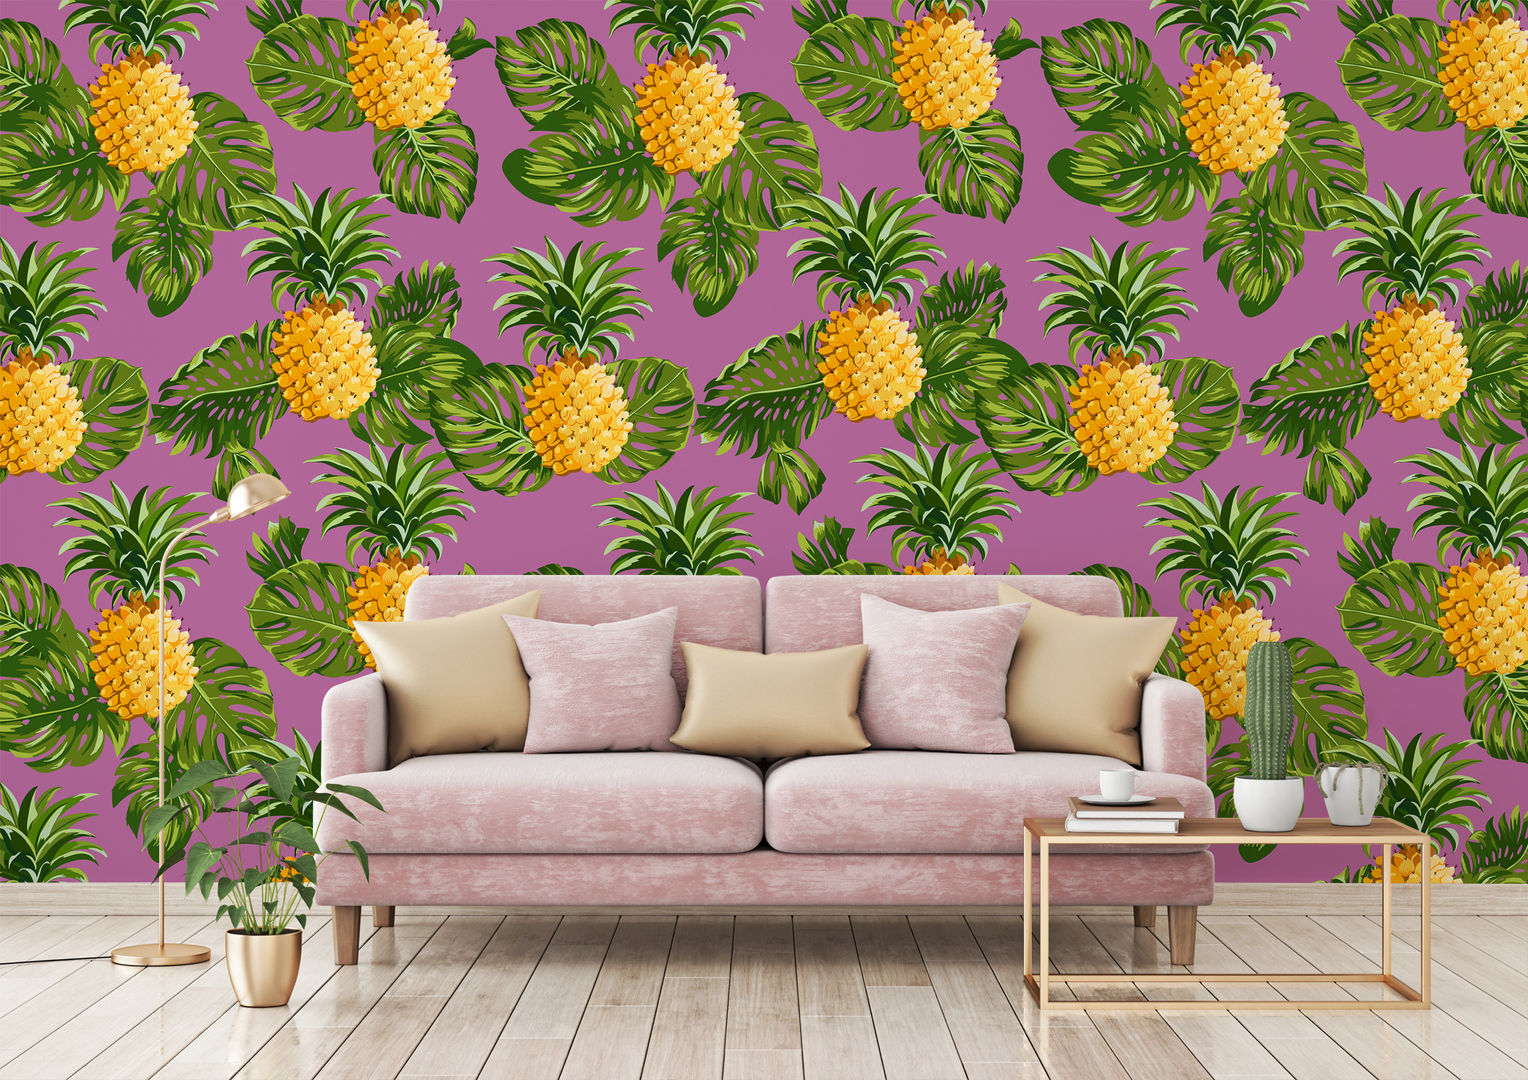 HYPNOTIC PINEAPPLES Pixers Salas de estilo tropical Pixers,pink,pineapple,wallmural,wallpaper,tropical